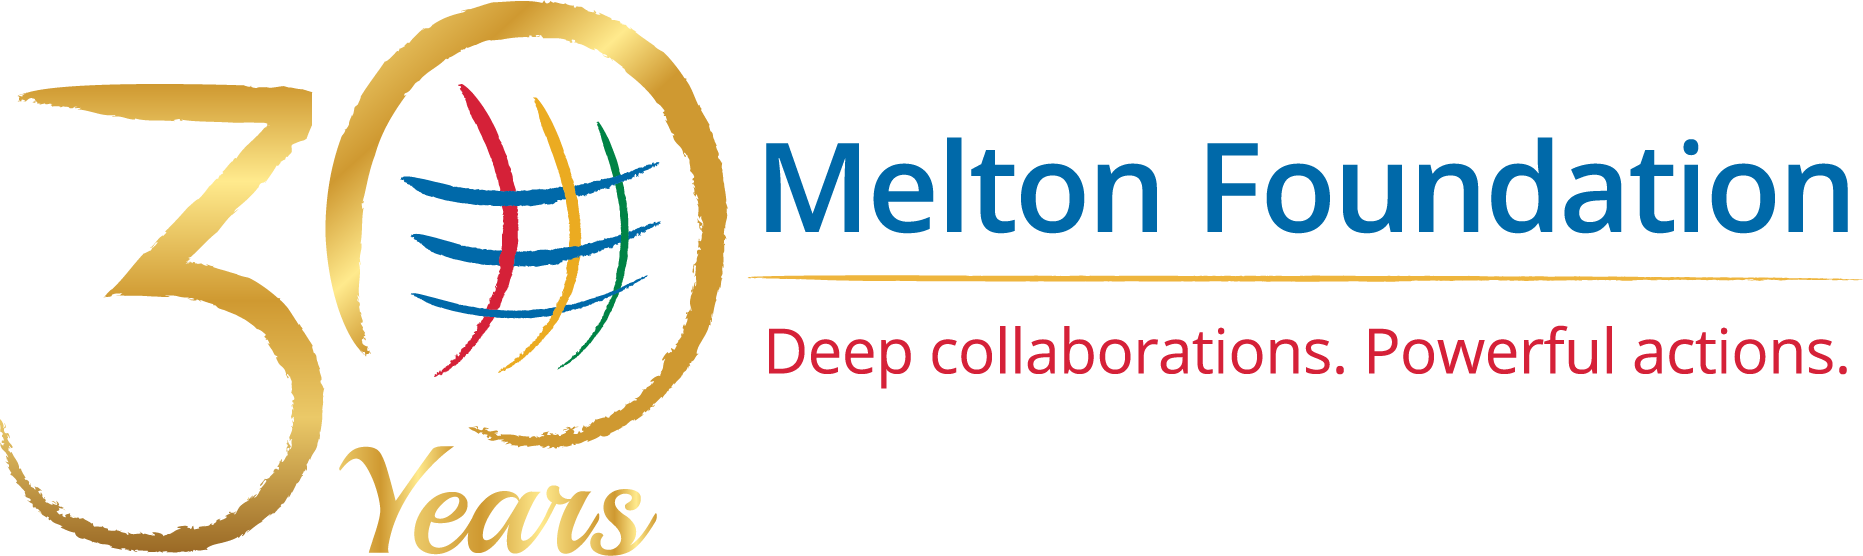 Melton Fellows